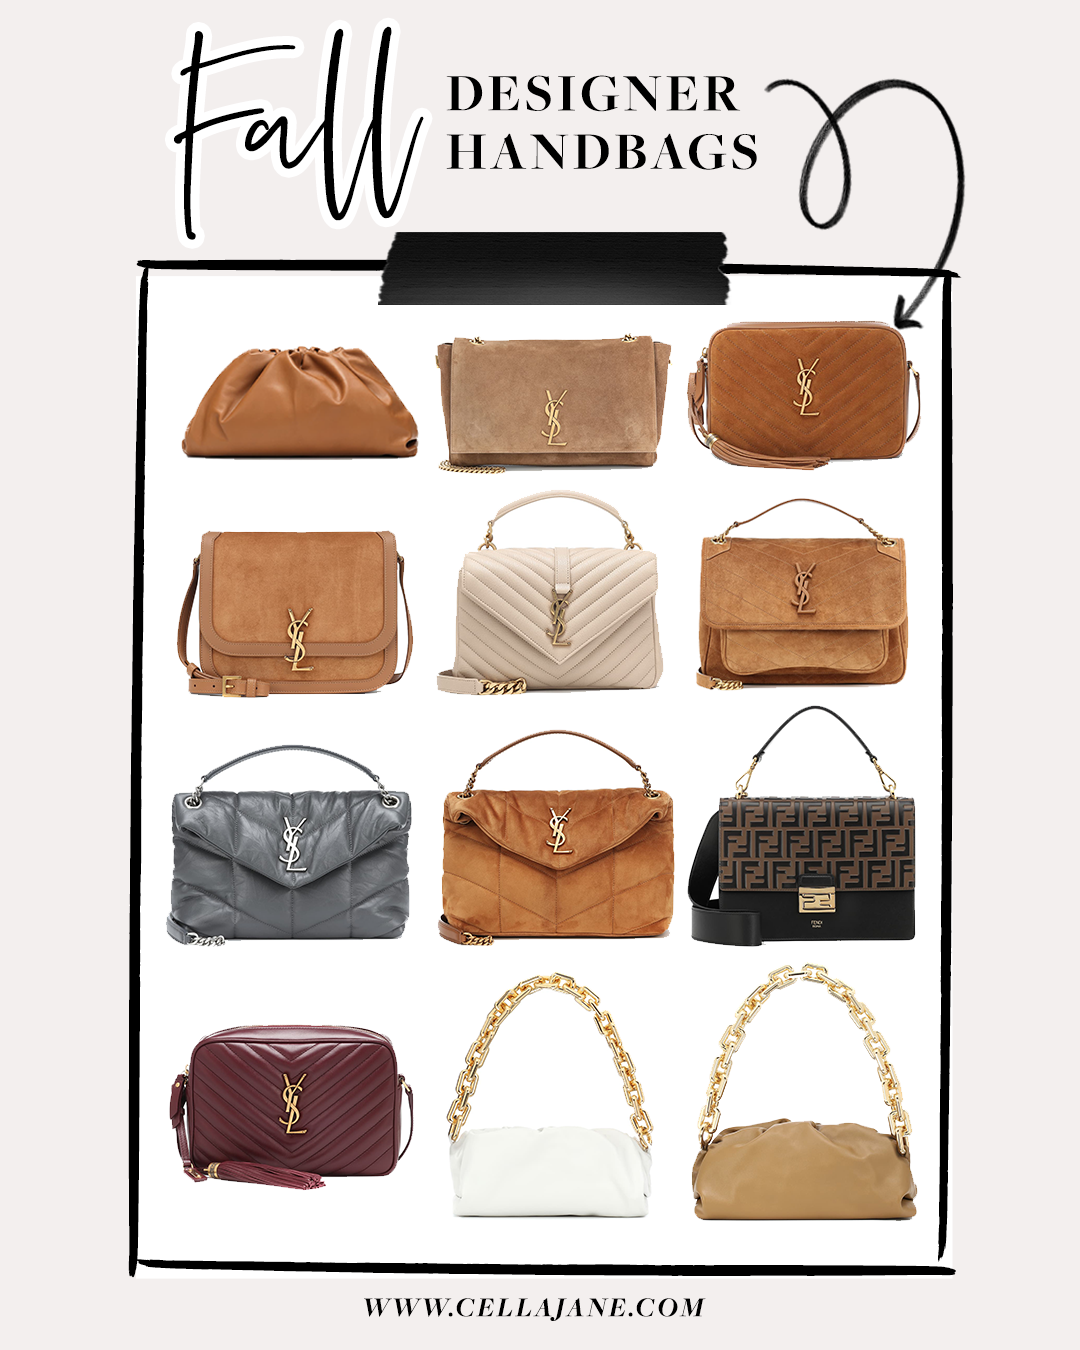 My Favorite Designer Handbags for Fall